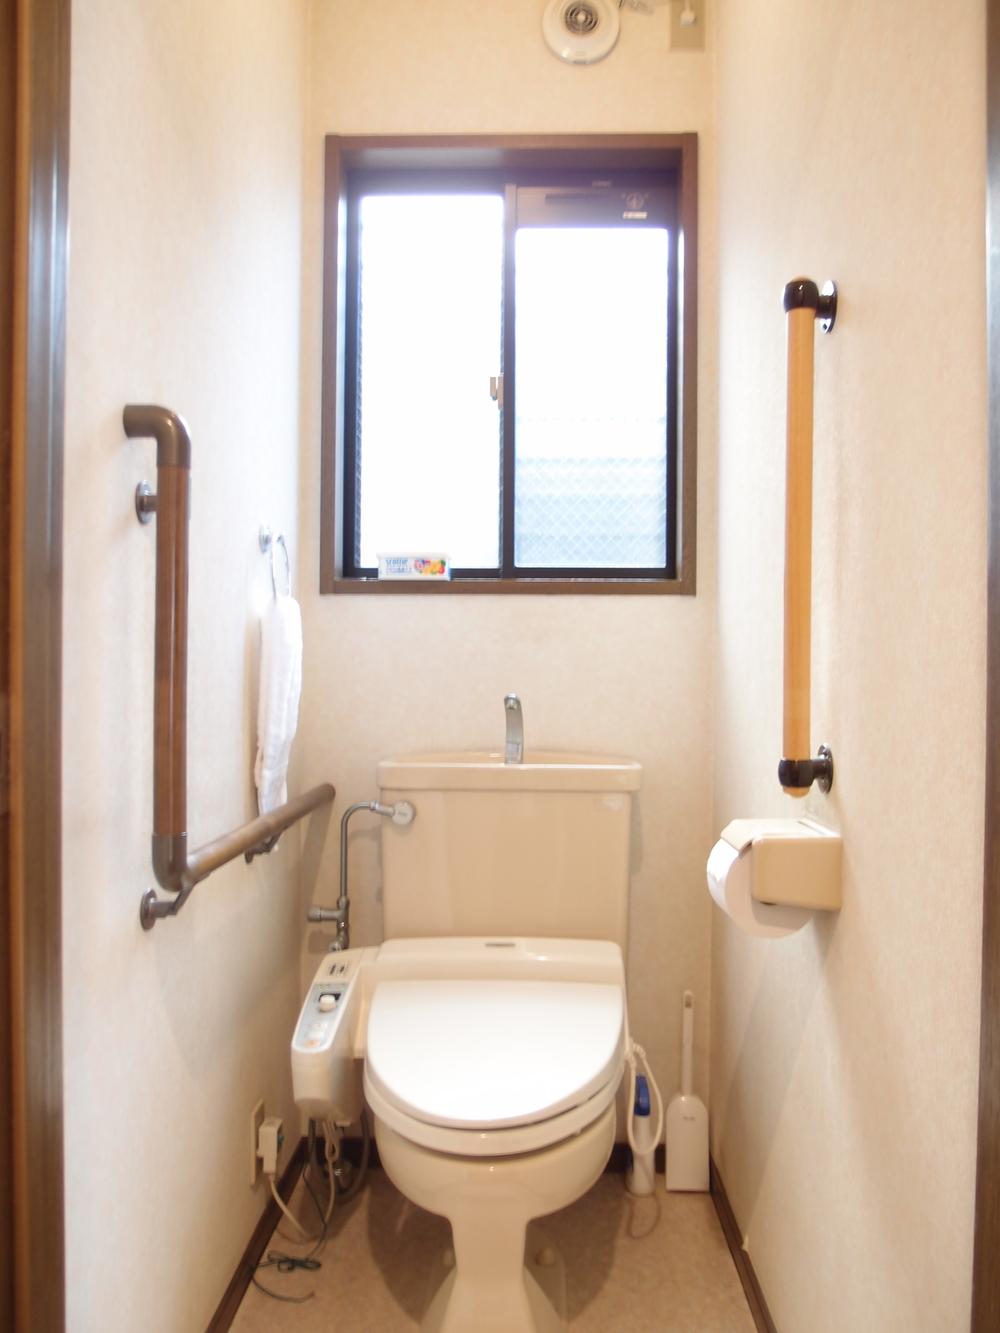 Toilet. First floor room (12 May 2013) Shooting